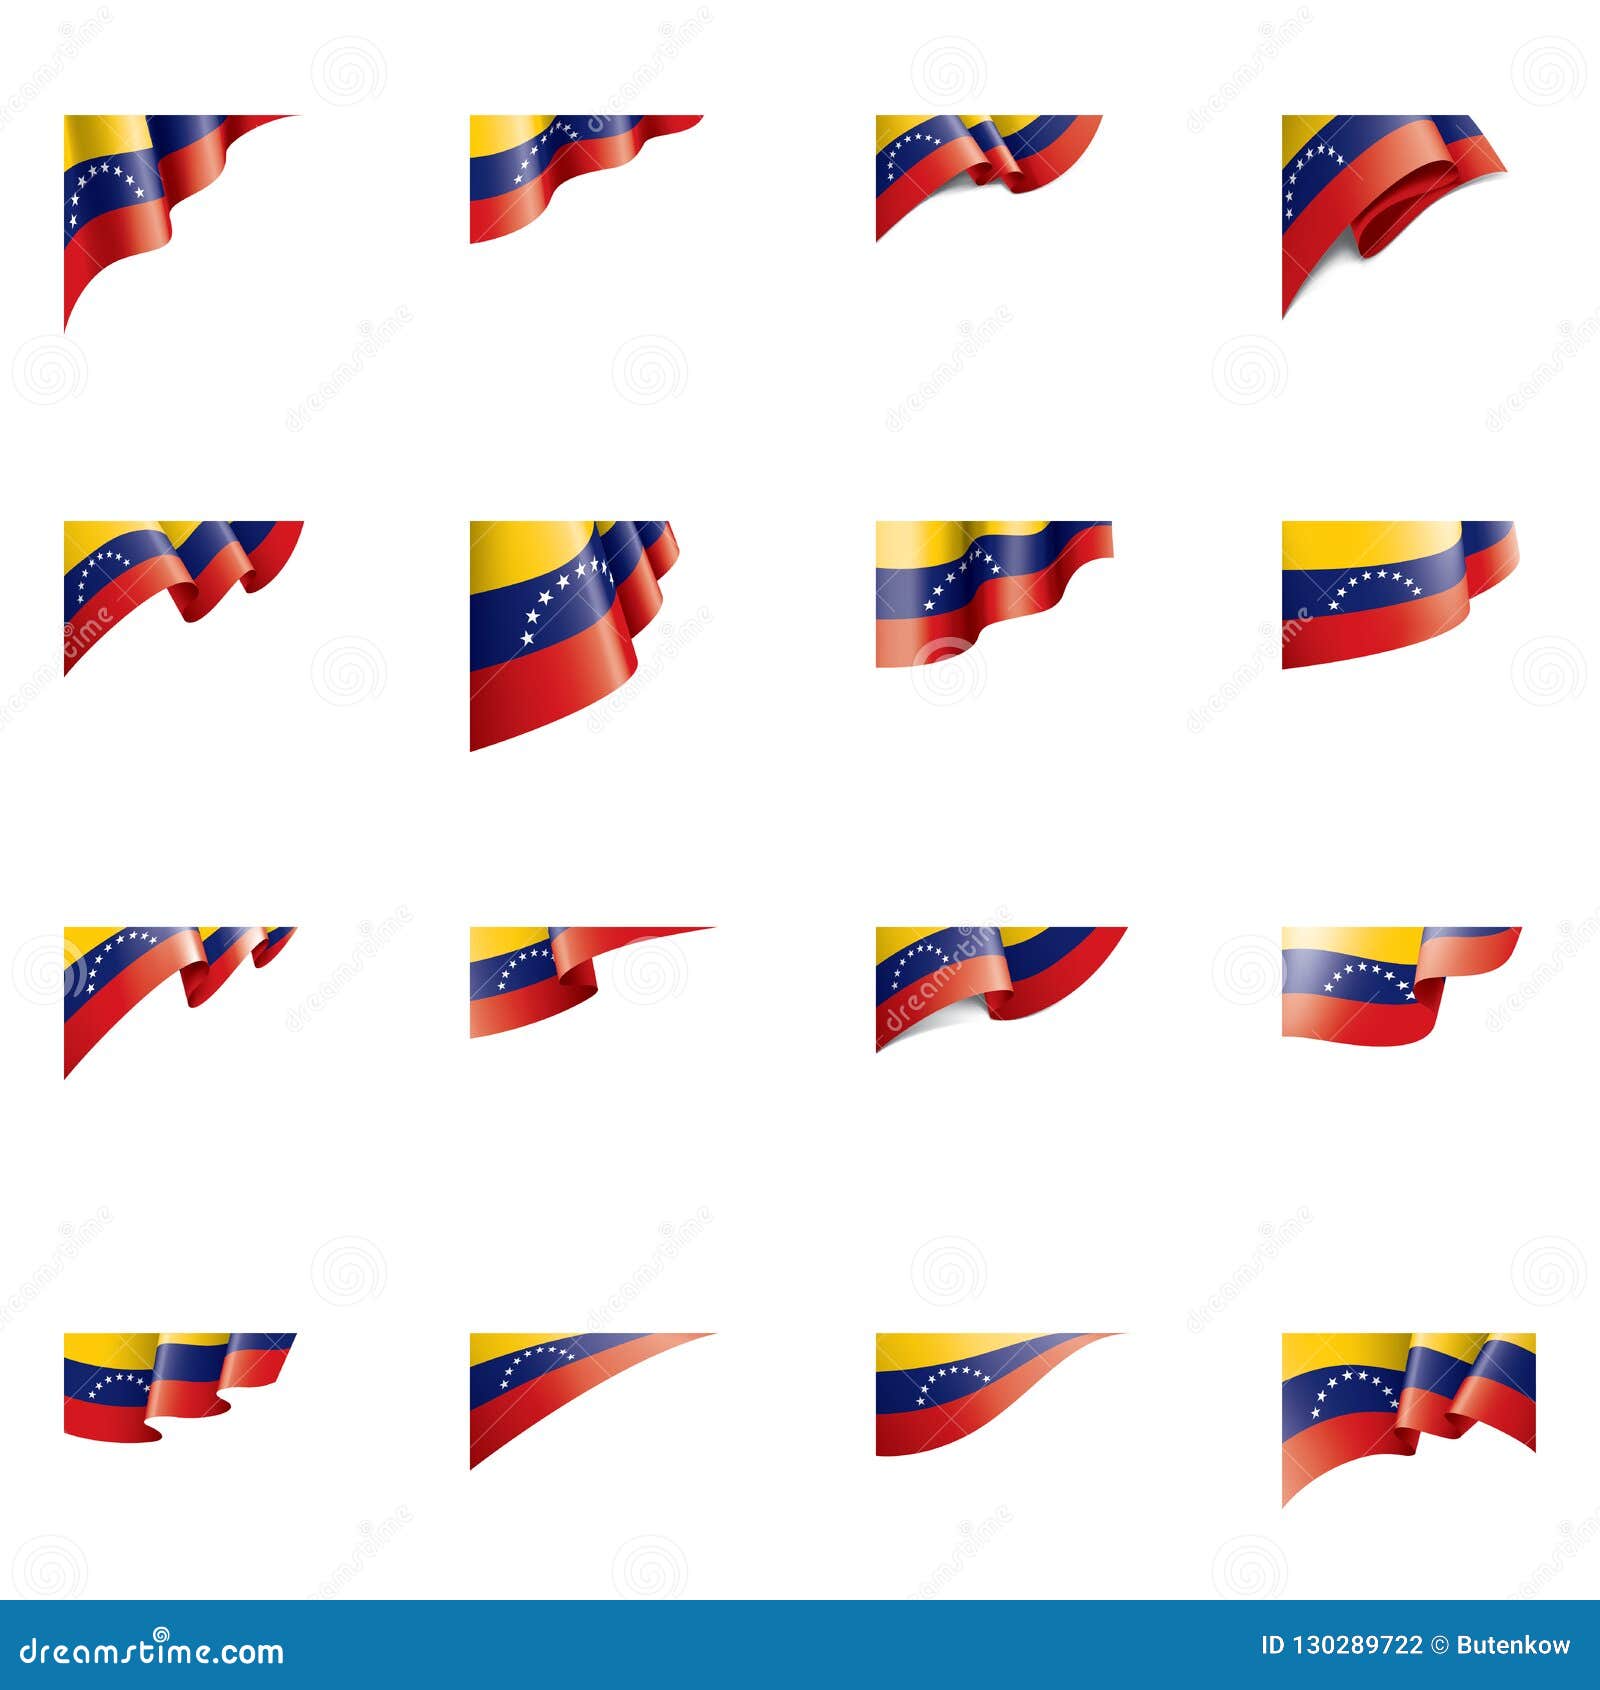 venezuela flag,   on a white background